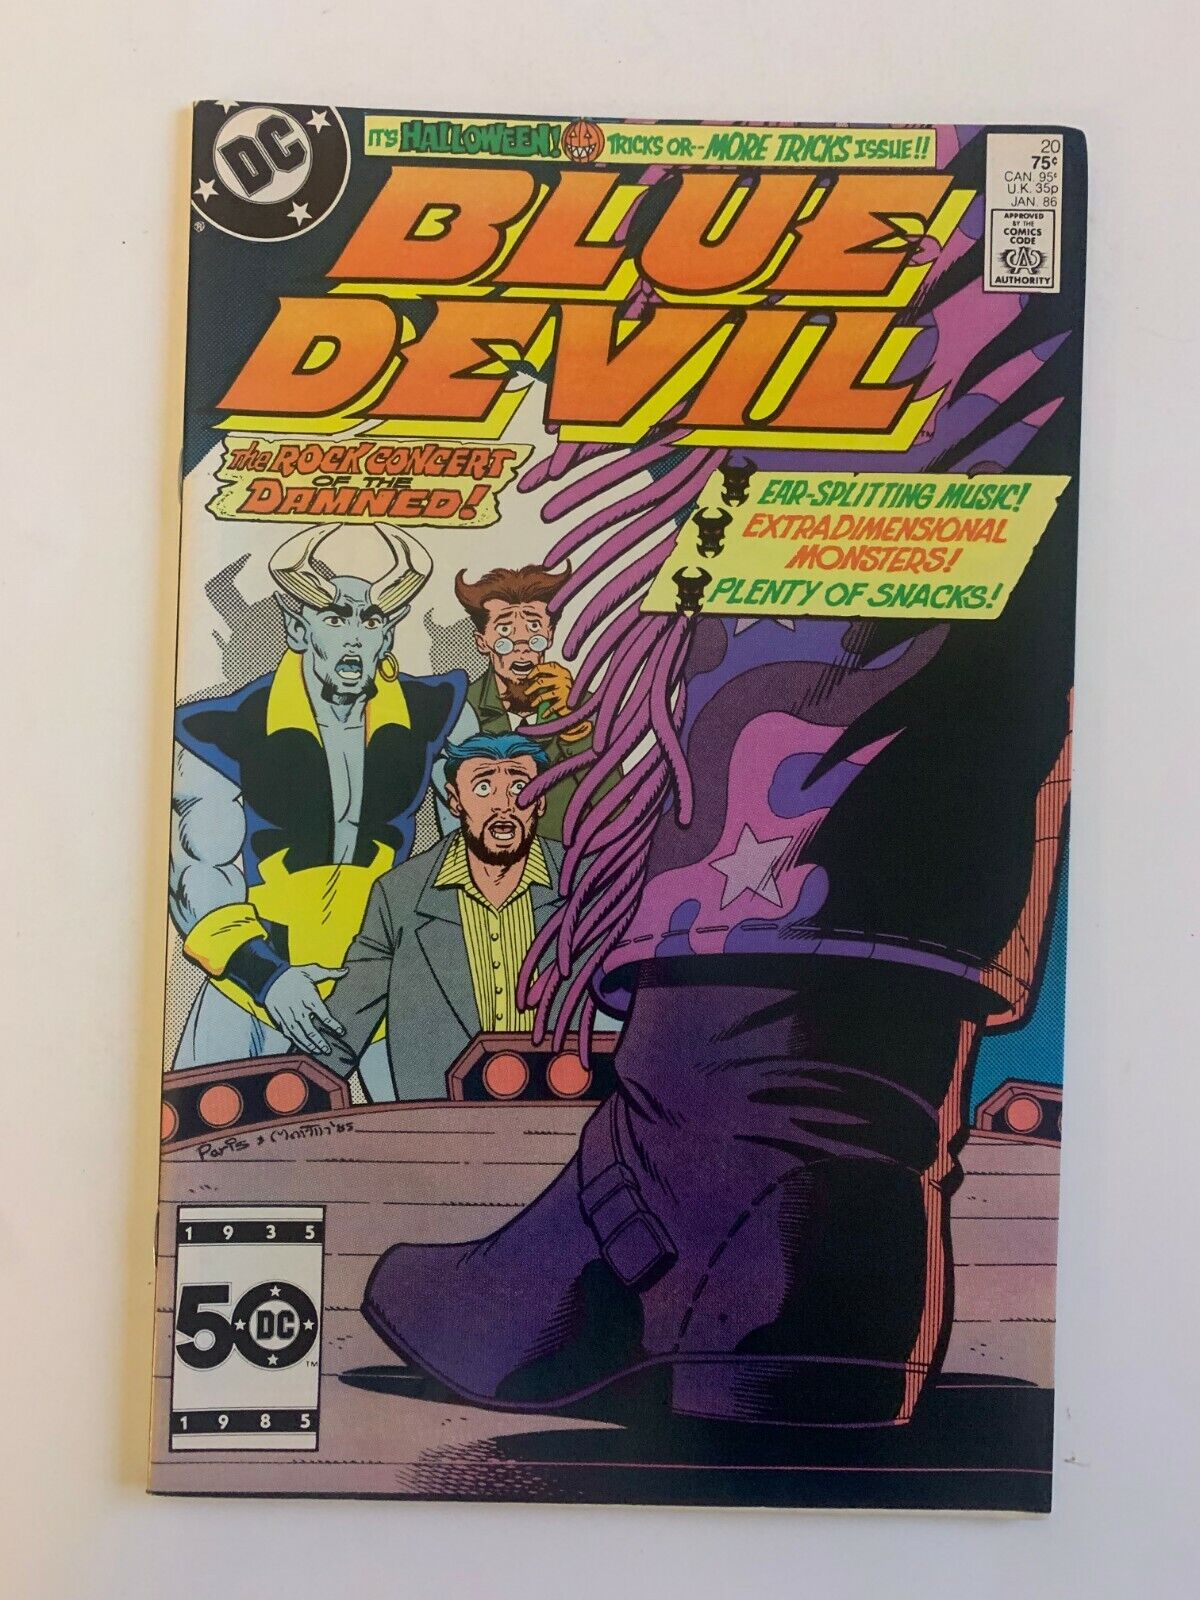 Blue Devil #20 - Jan 1986 - (1119)